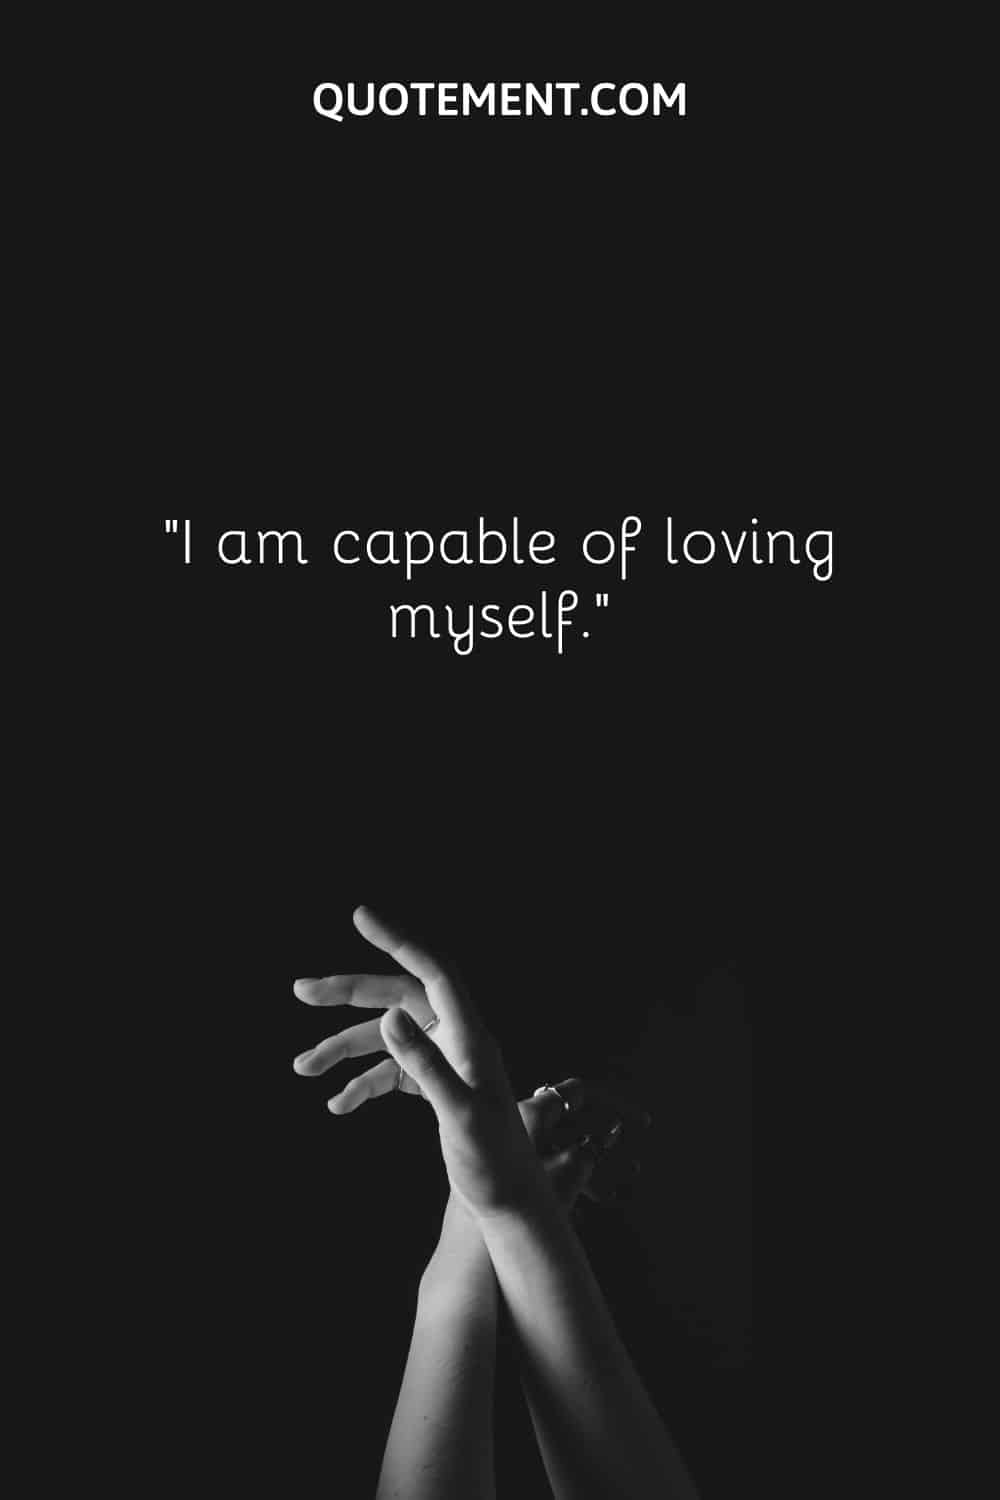 I am capable of loving myself